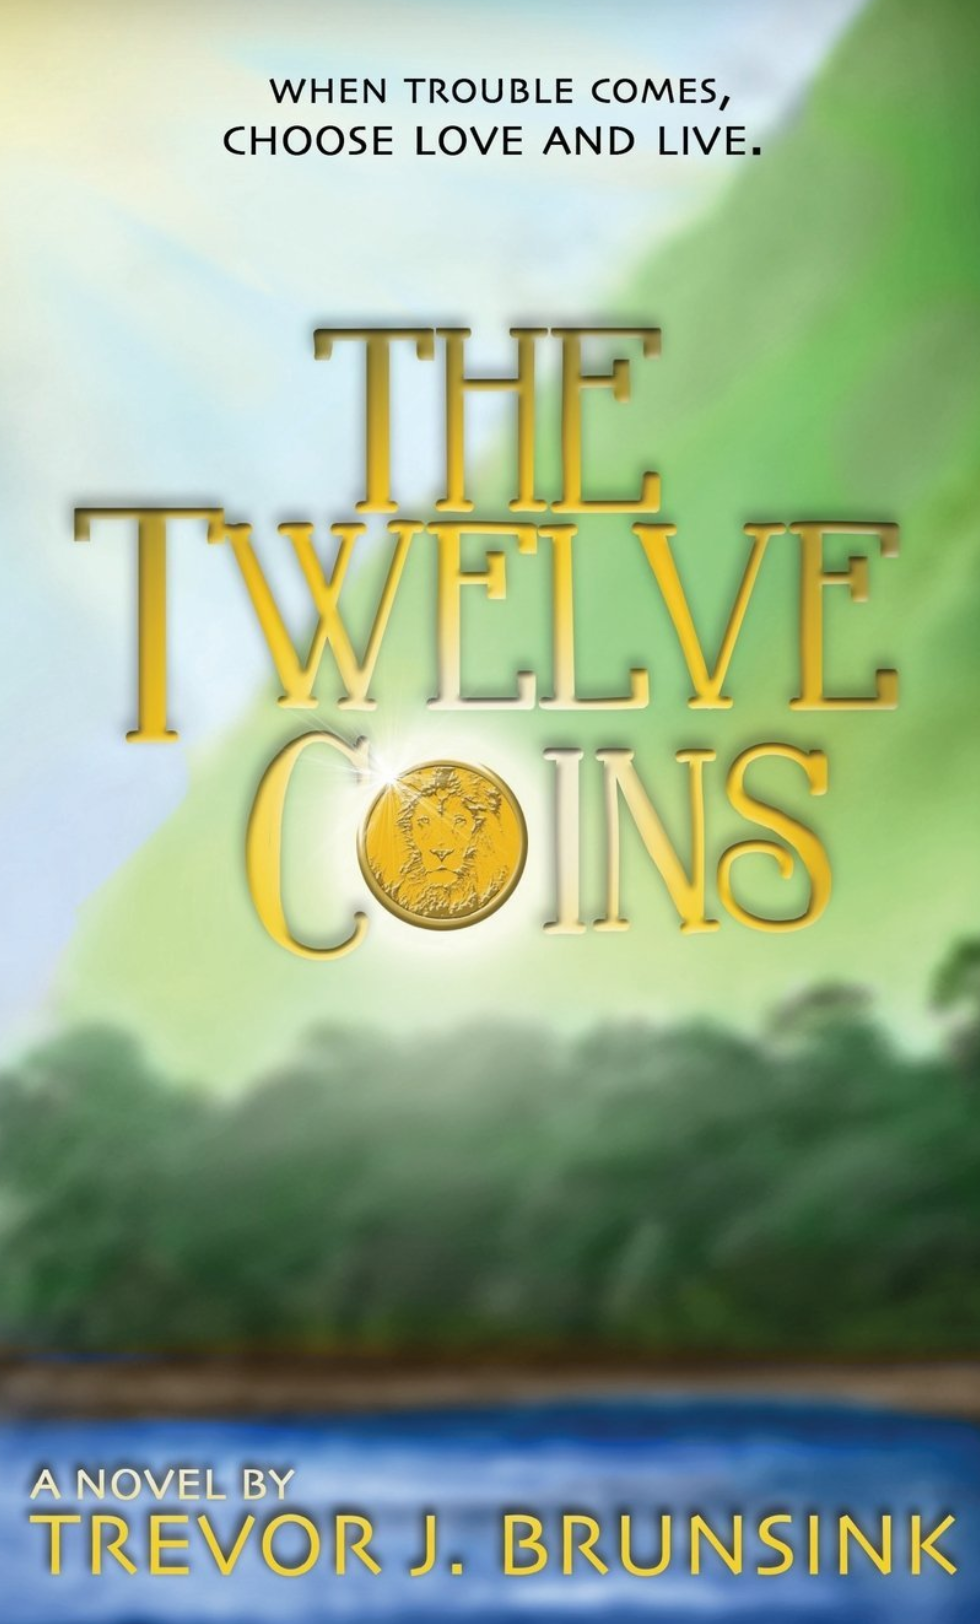 Most recent image: THE TWELVE COINS